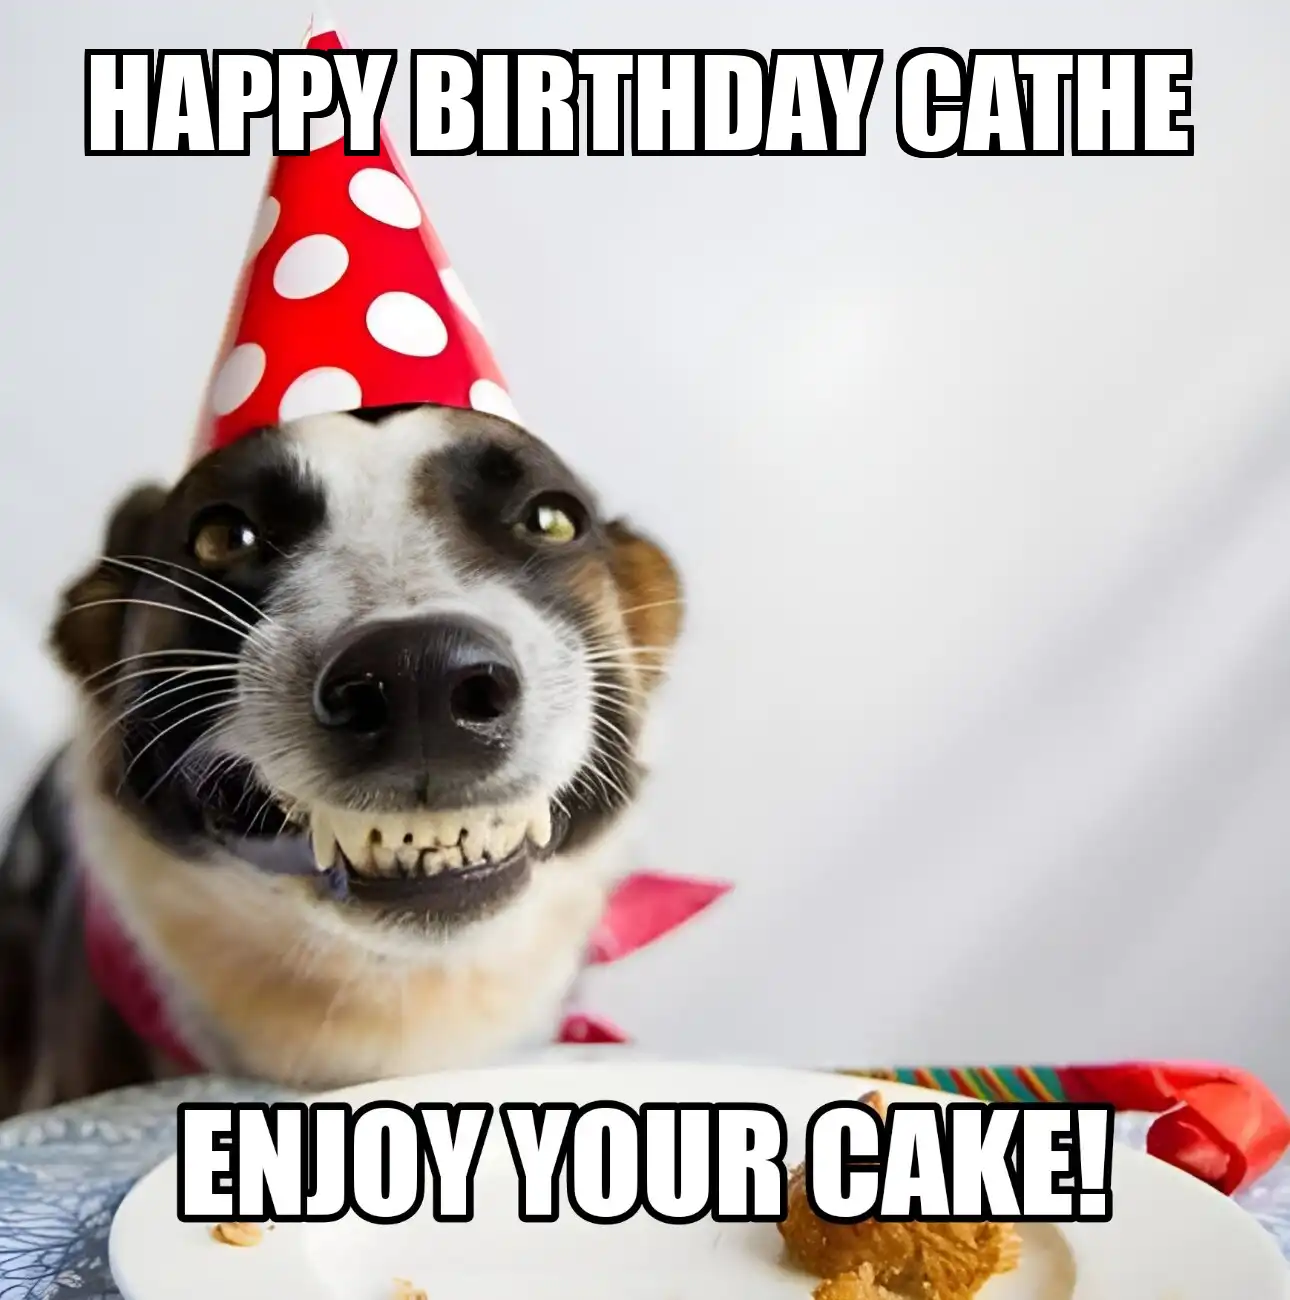 Happy Birthday Cathe Enjoy Your Cake Dog Meme